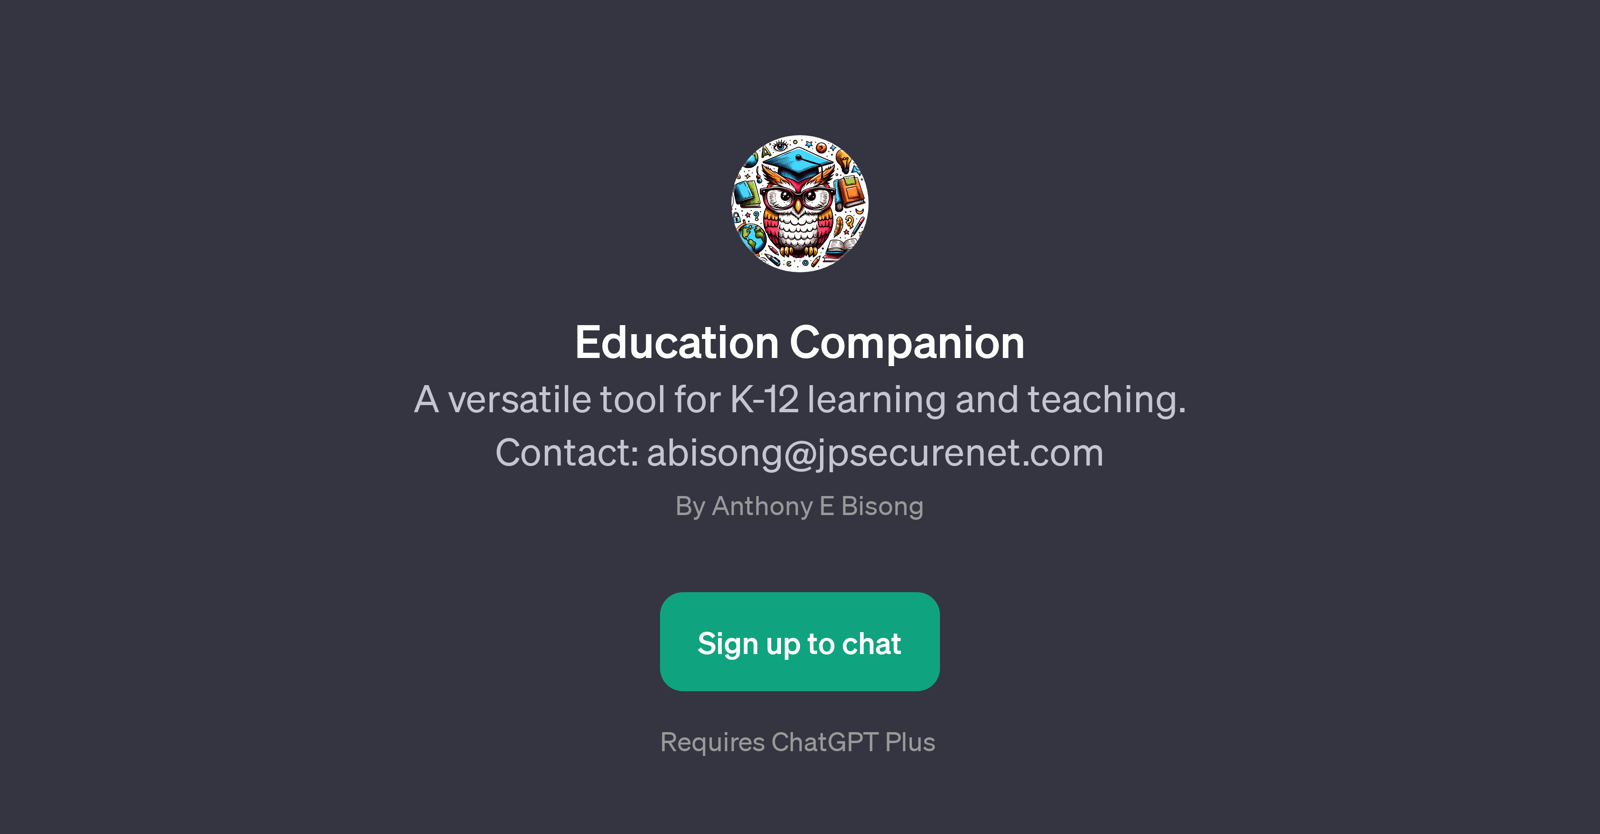 Education Companion website